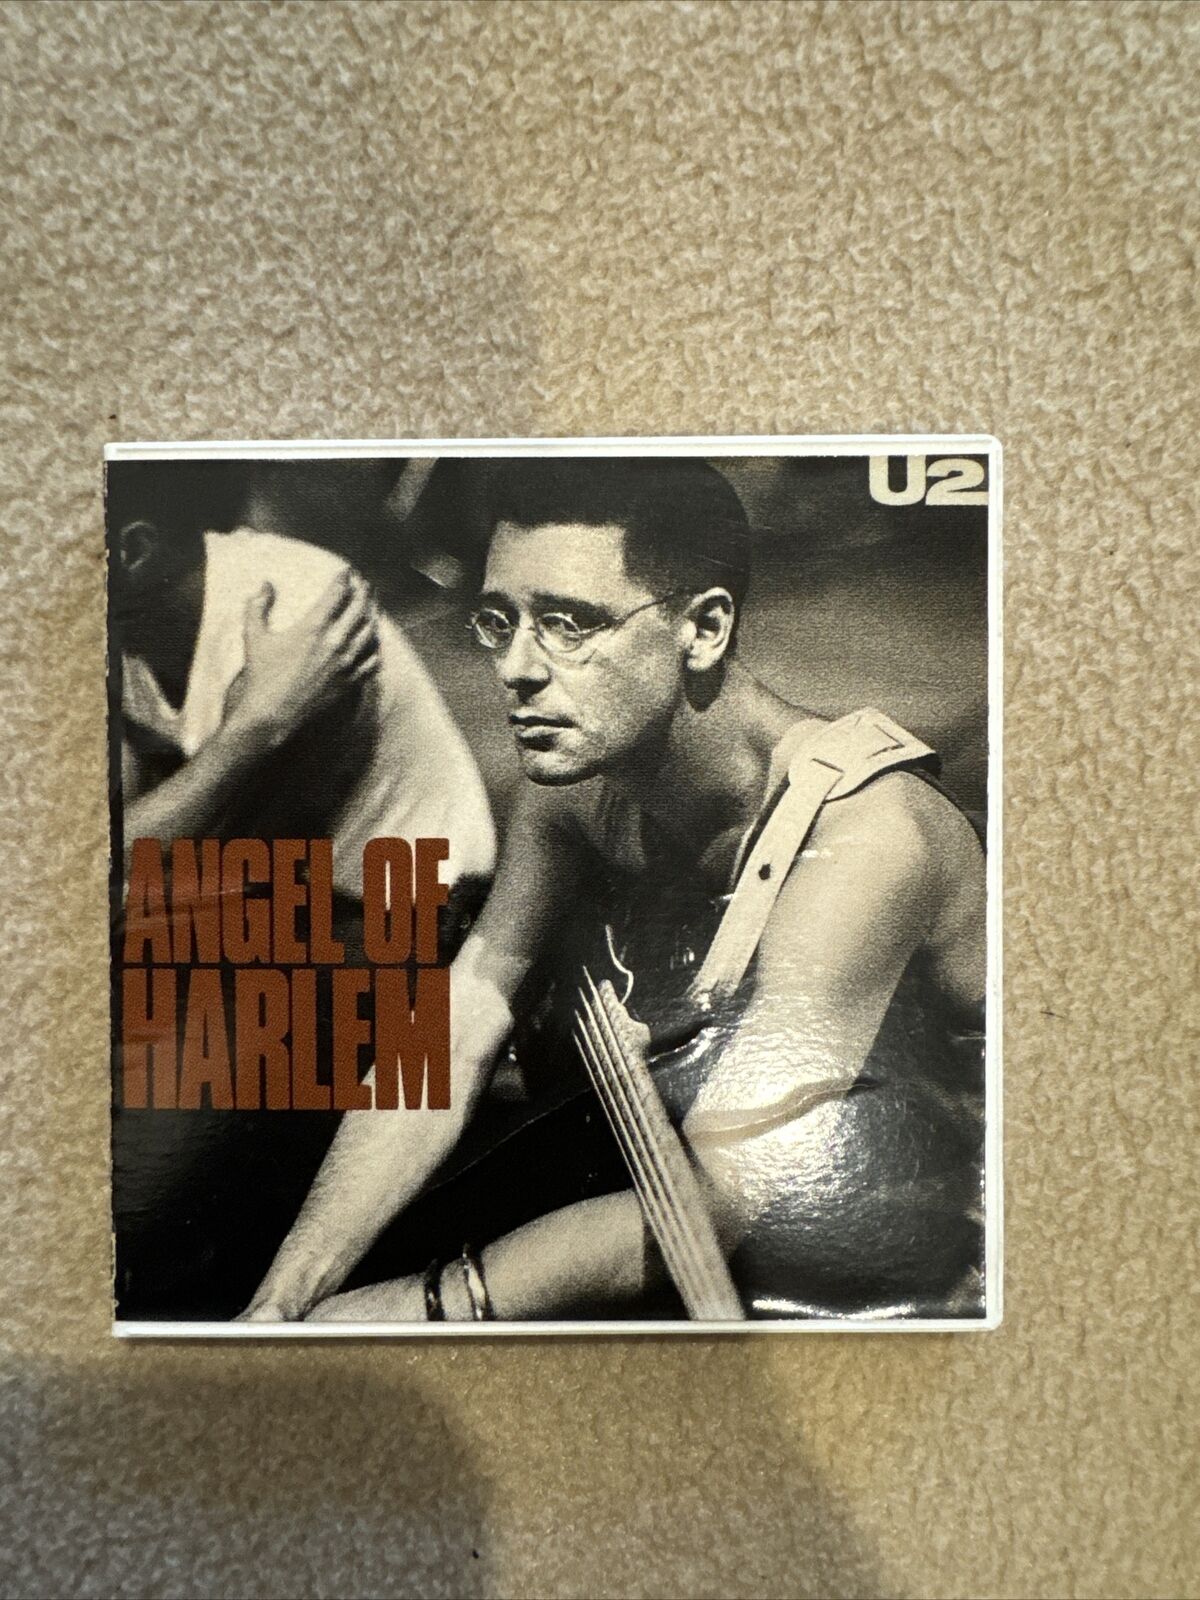 U2 "Angel of Harlem" CD3 single GREAT SHAPE!